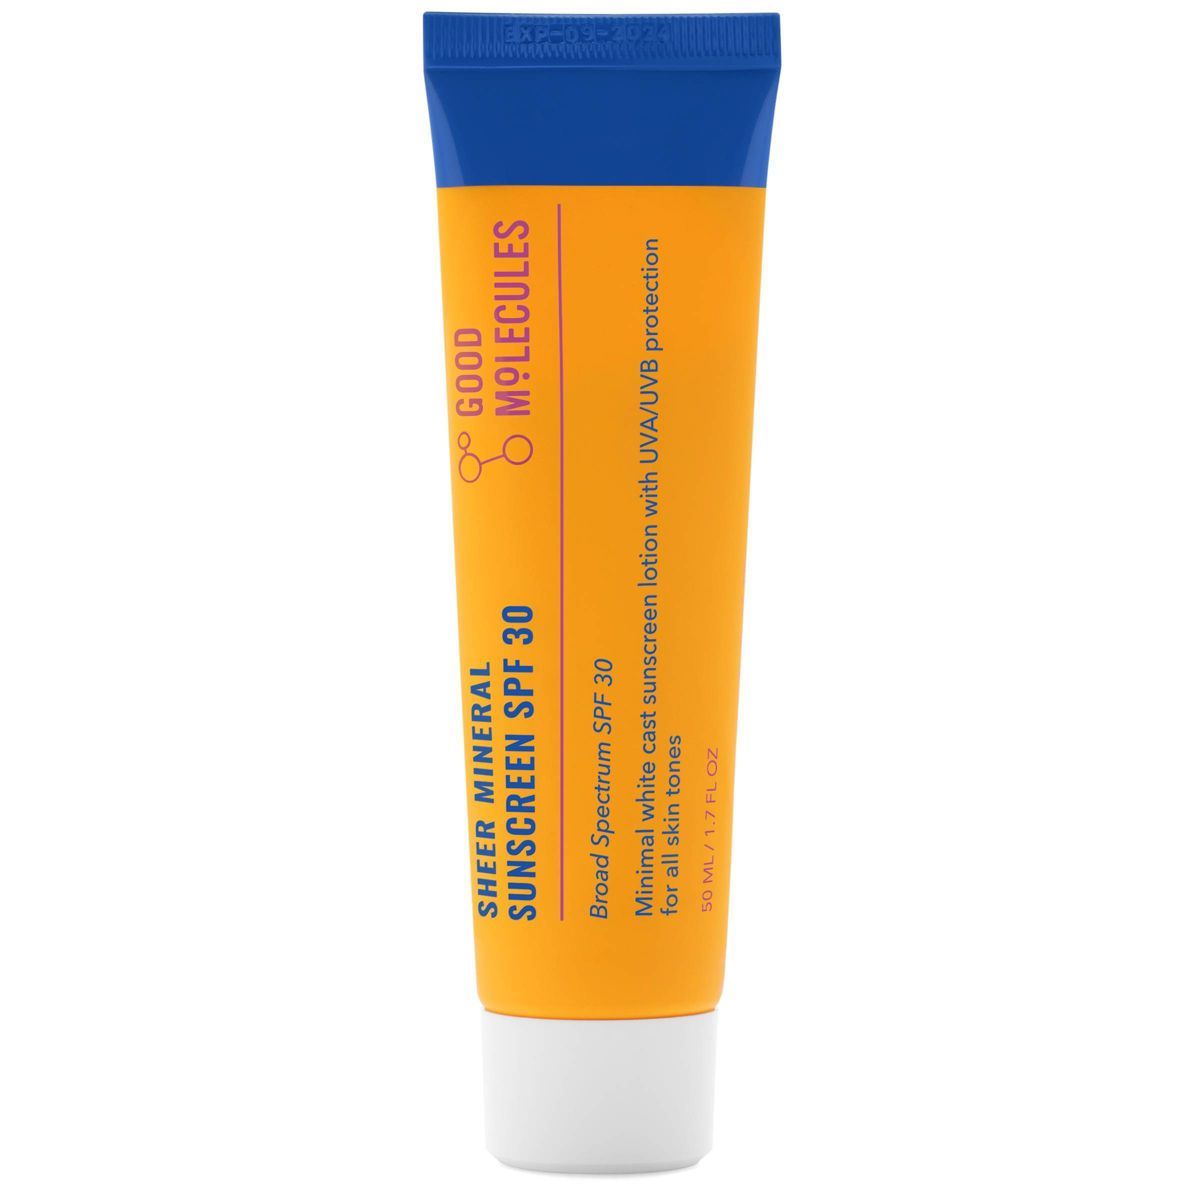 Good Molecules Sheer Mineral Face Sunscreen - SPF 30 - 1.7 fl oz | Target